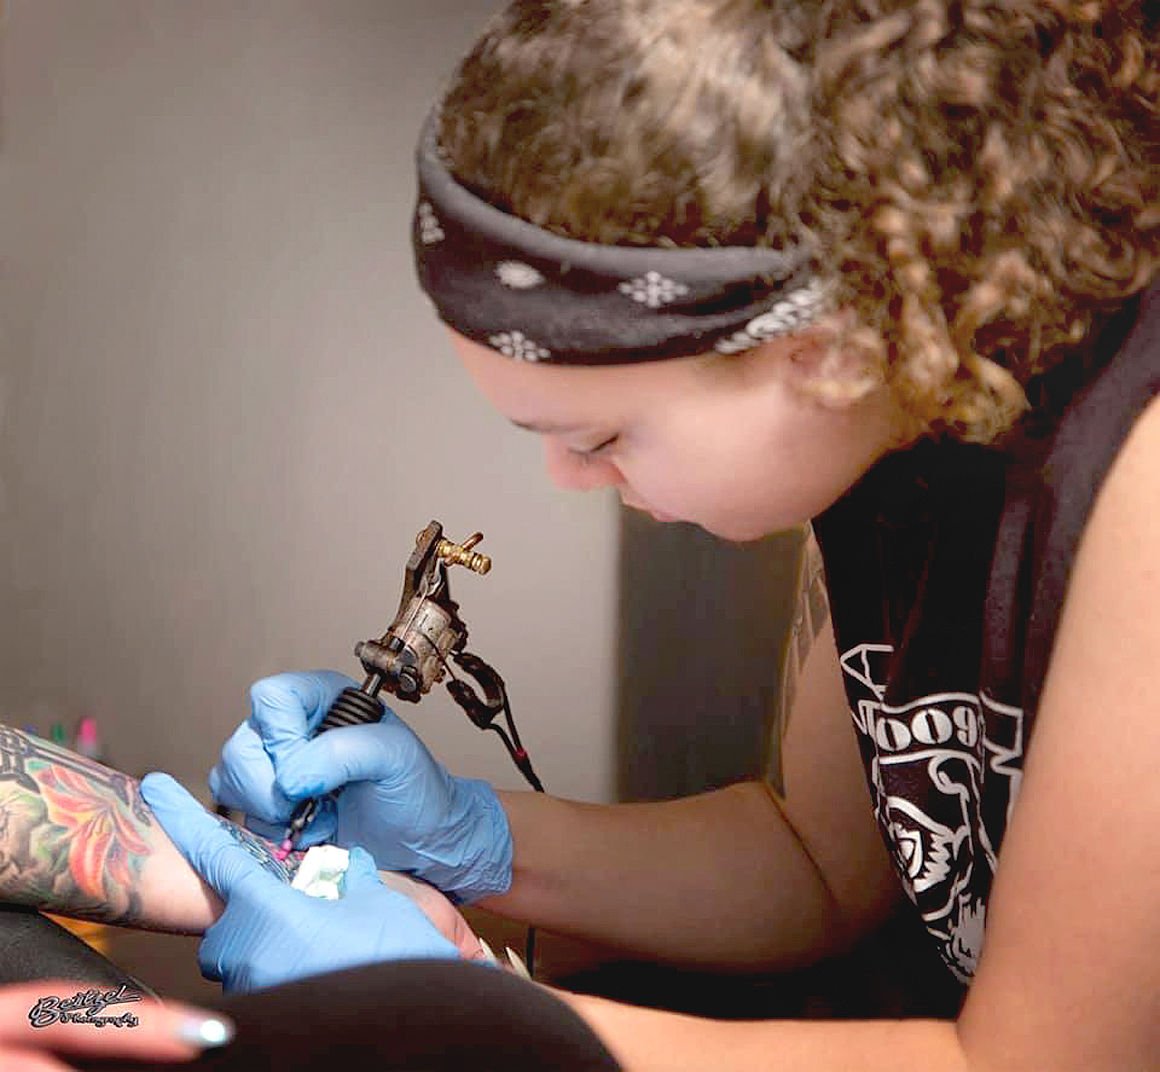 welder in Tattoos  Search in 13M Tattoos Now  Tattoodo